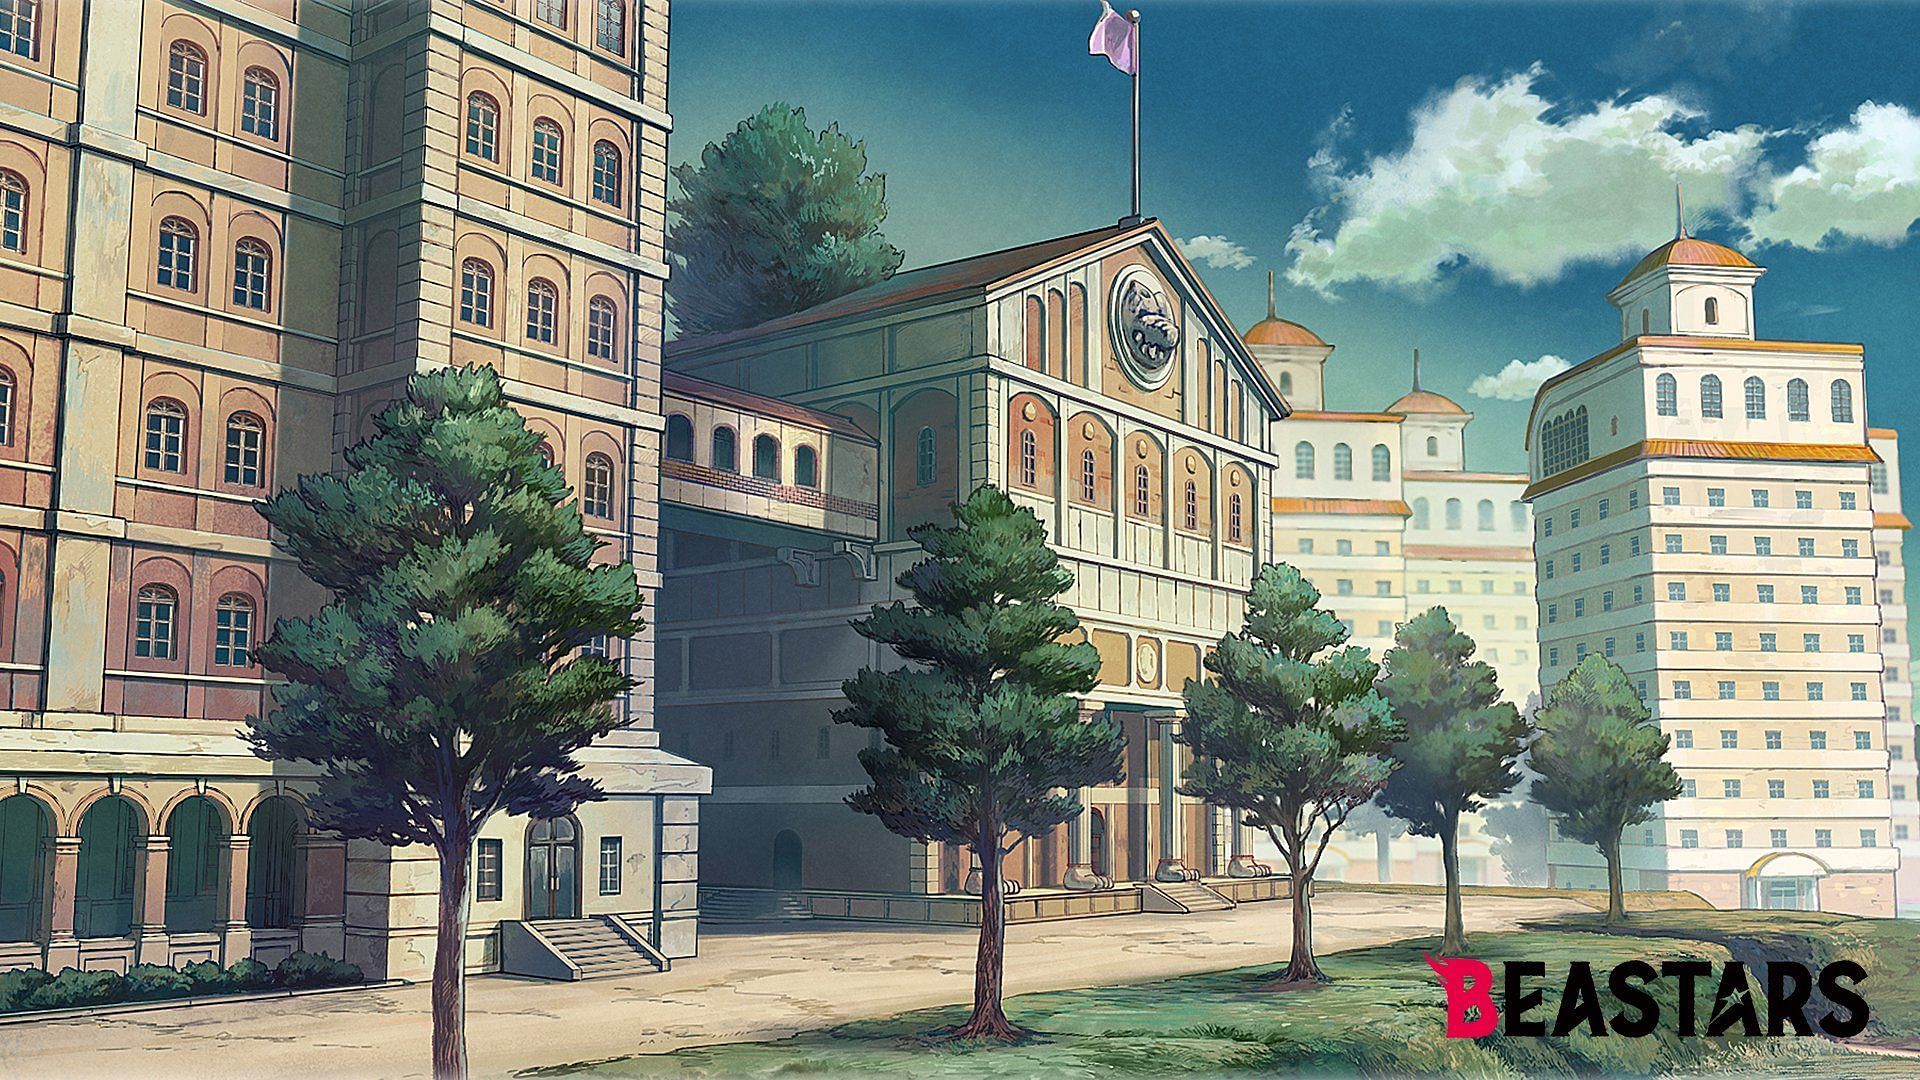 Cherryton Academy from the shonen anime Beastars (Image via studio Orange)